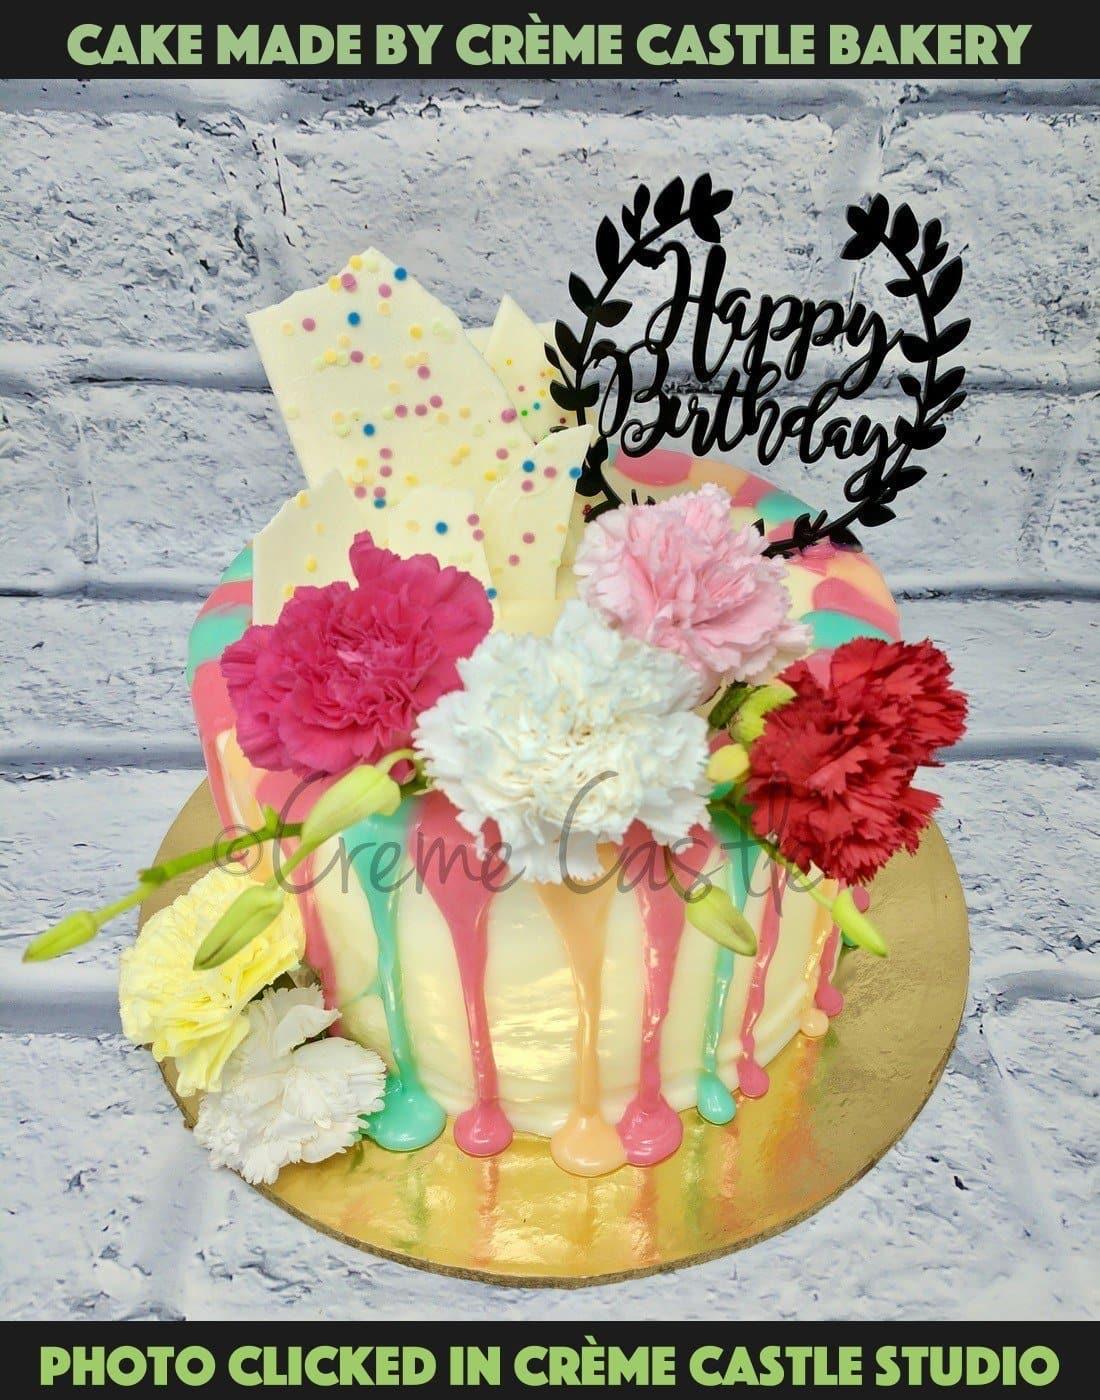 File:Birthday Cake For Mom.jpg - Wikimedia Commons